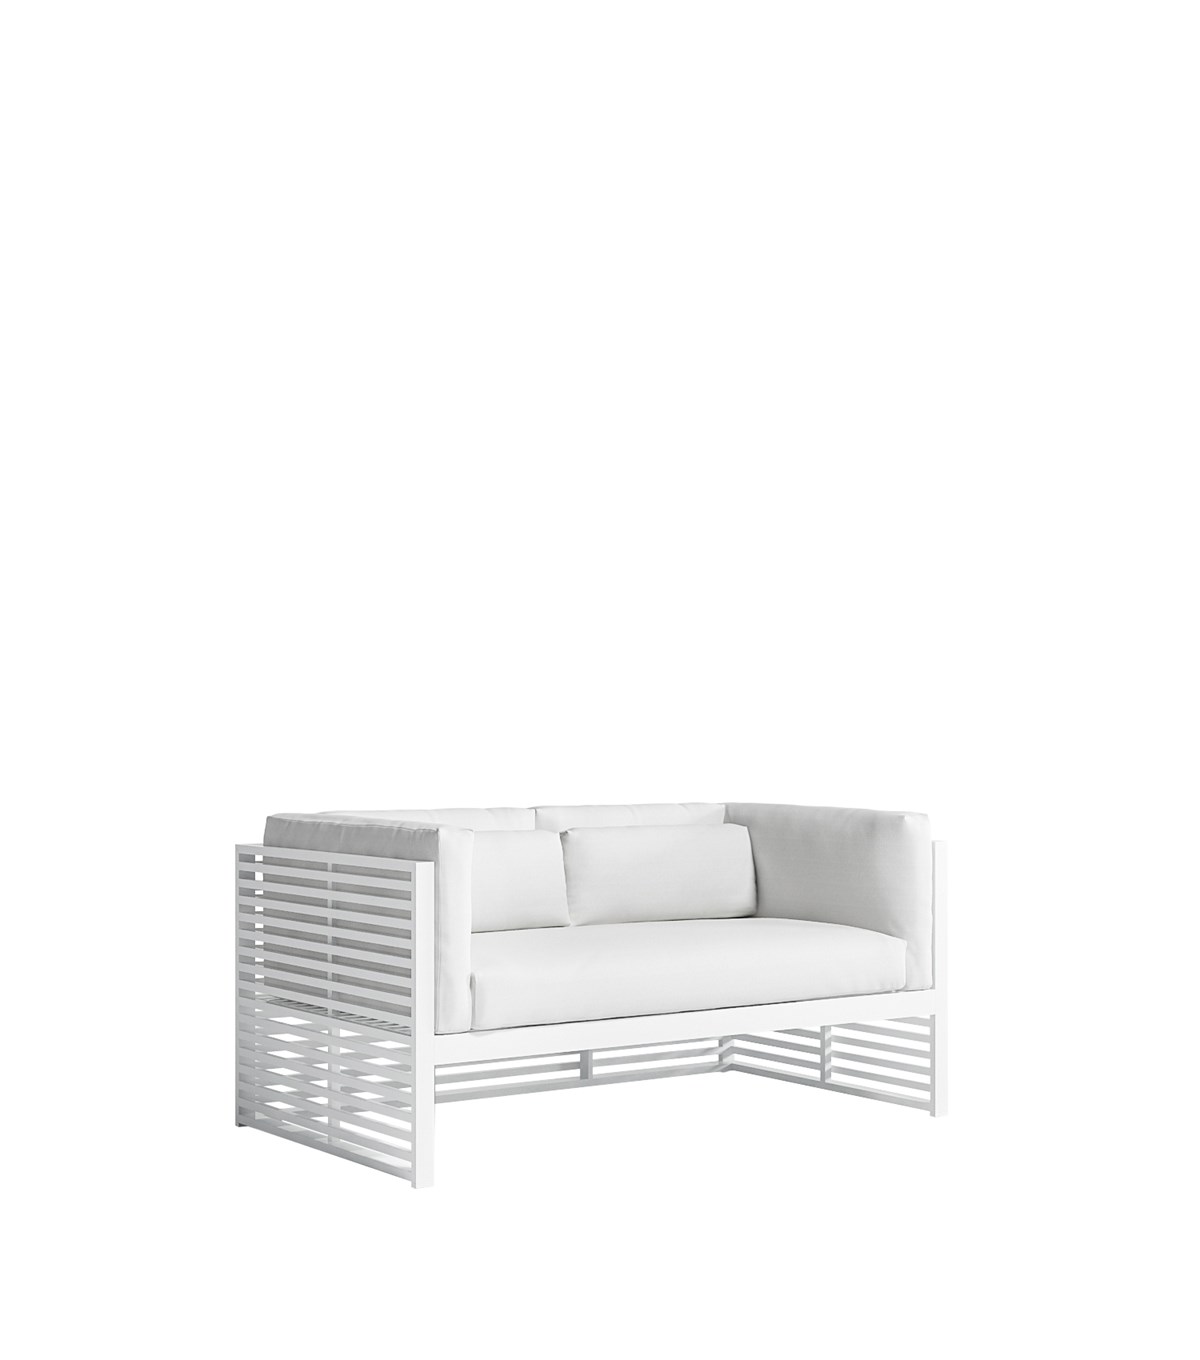 Dna 2 Seat Sofa White Product Image 2